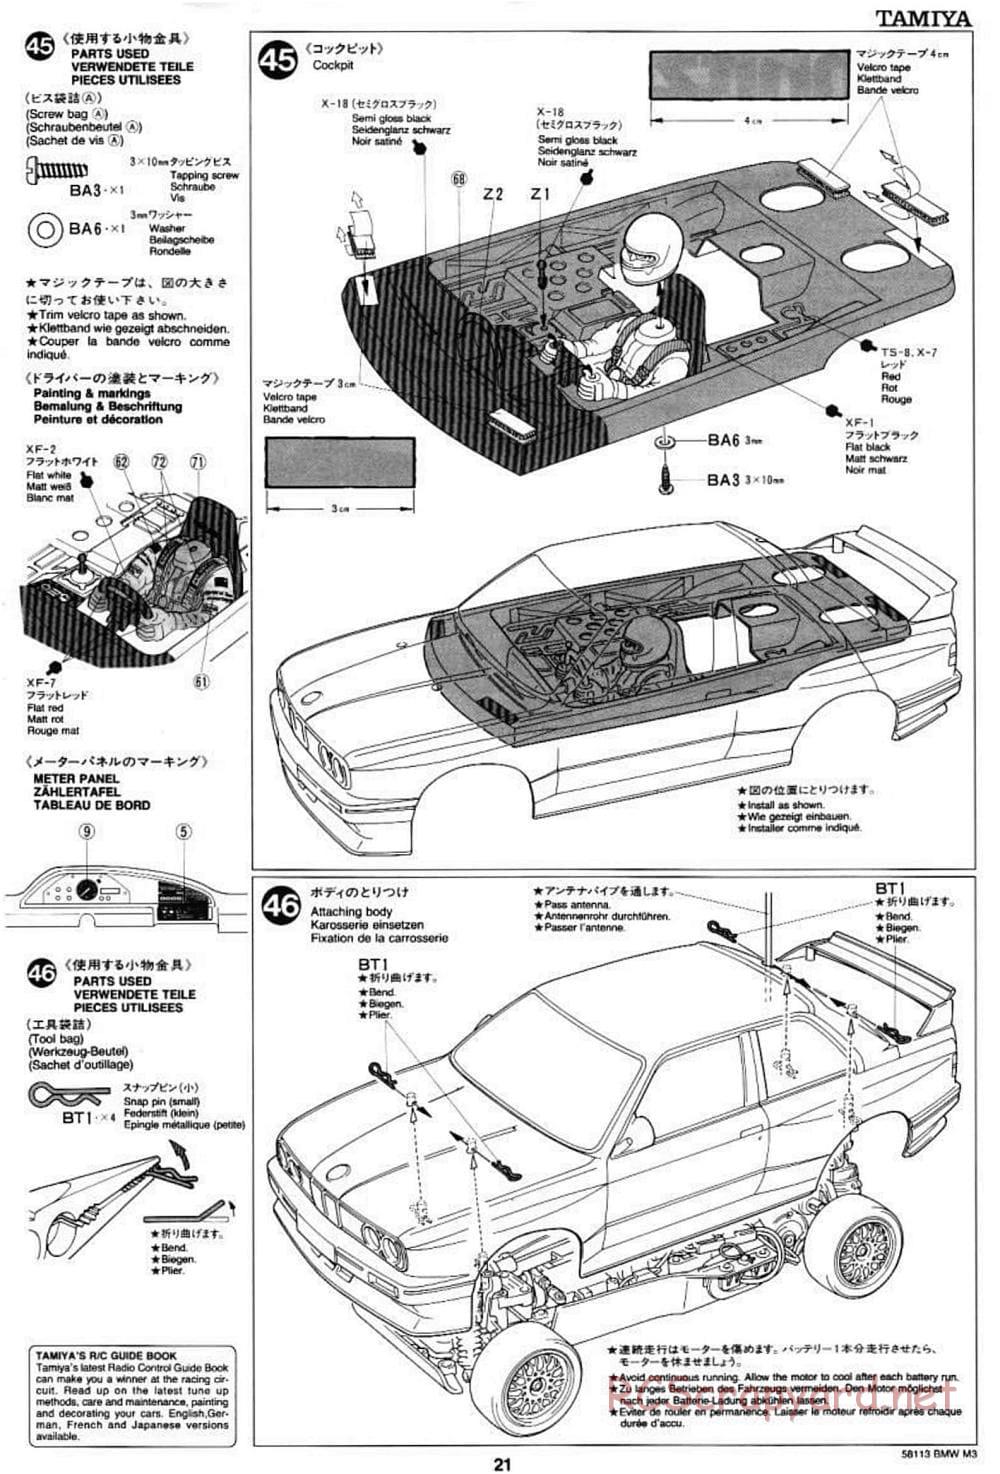 Tamiya - Schnitzer BMW M3 Sport Evo - TA-01 Chassis - Manual - Page 21